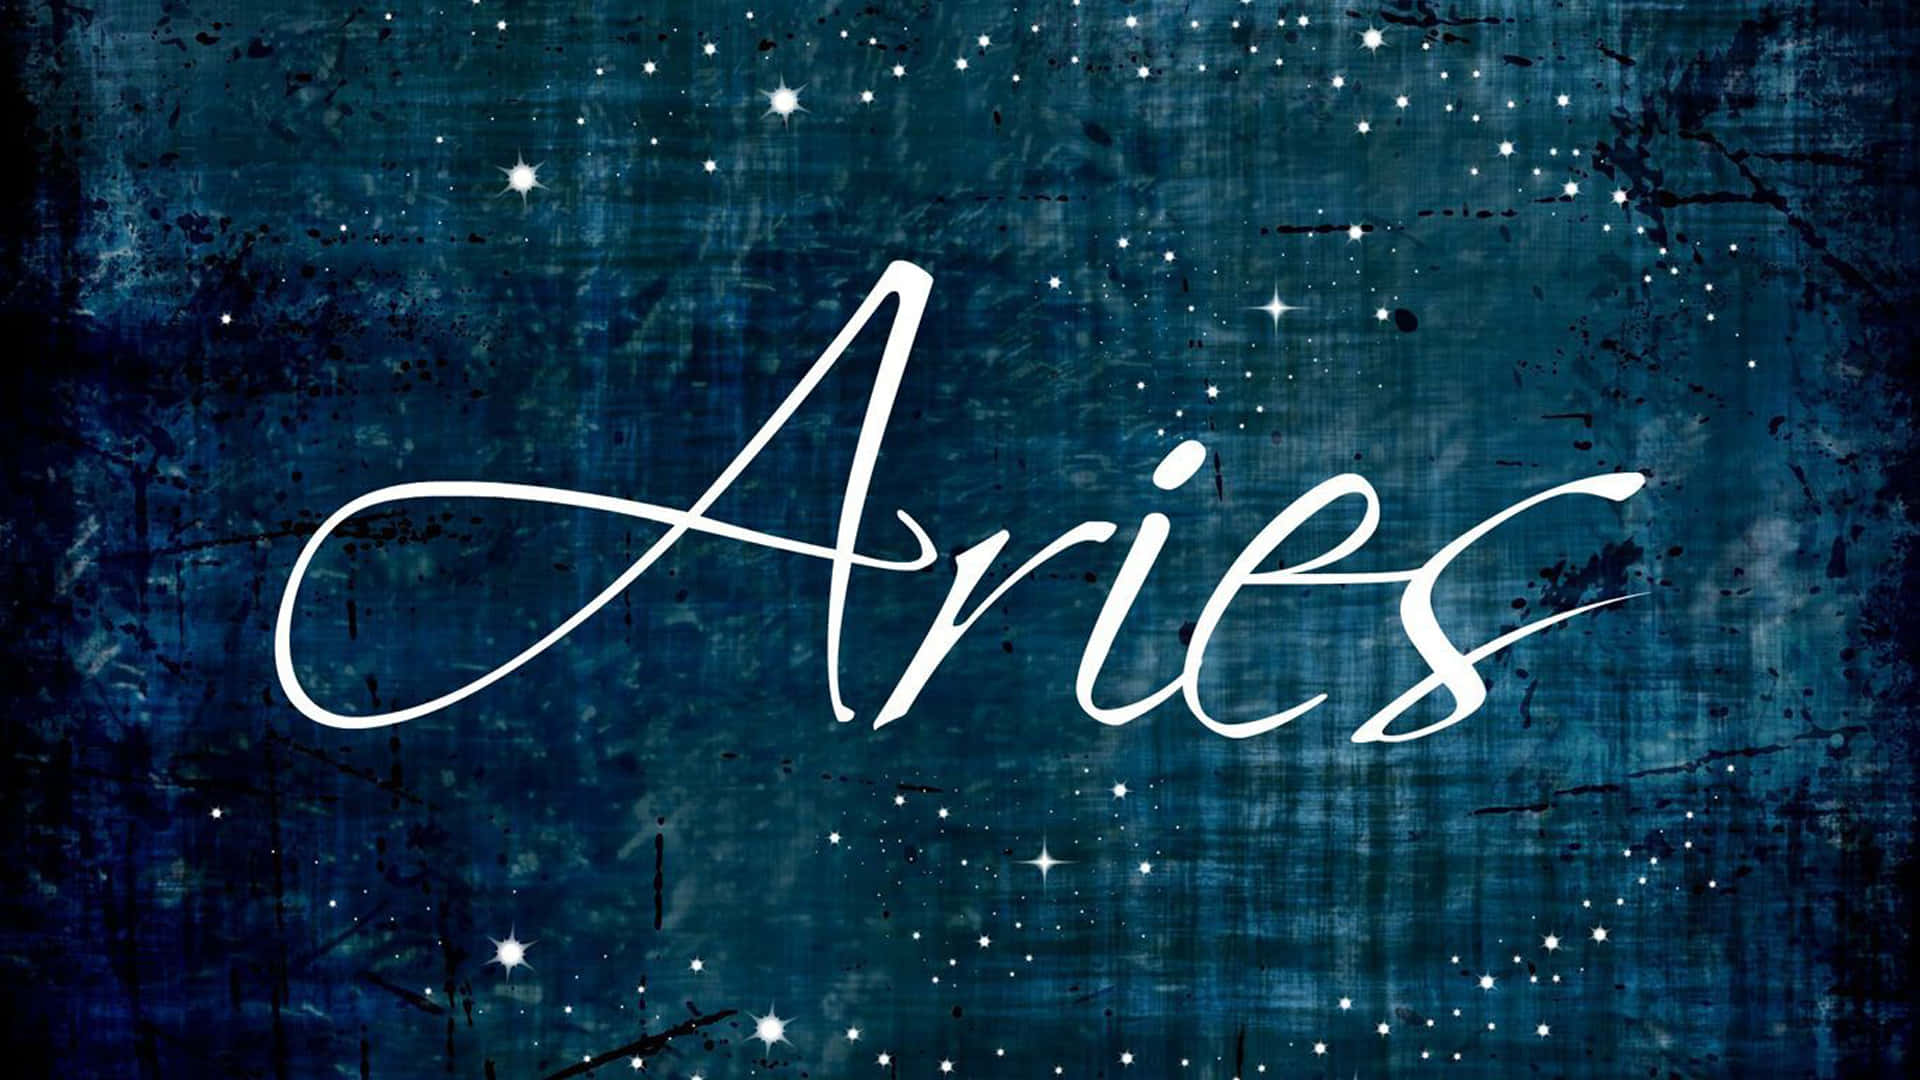 Enchanting Aries Constellation in Night Sky